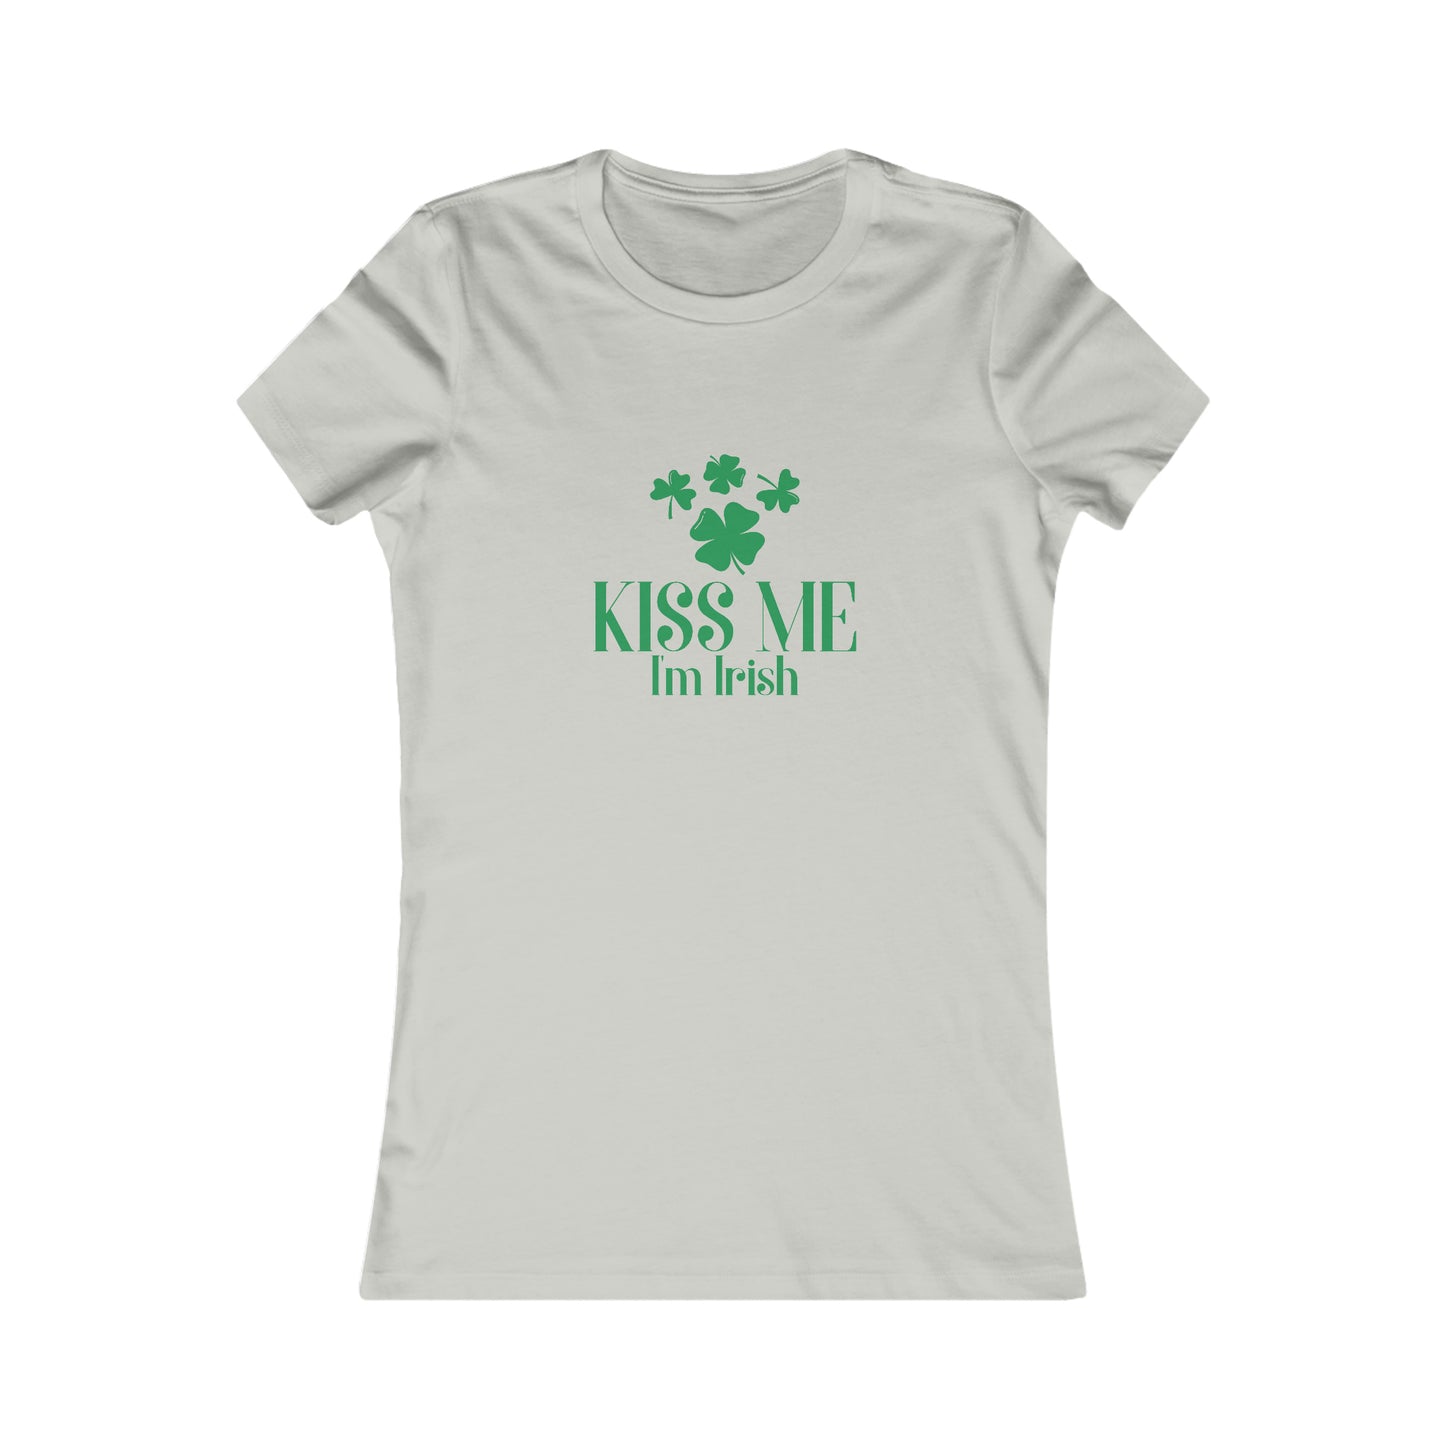 Women's Party T-shirt: Slim-fit; Cotton; Cute Irish graphics